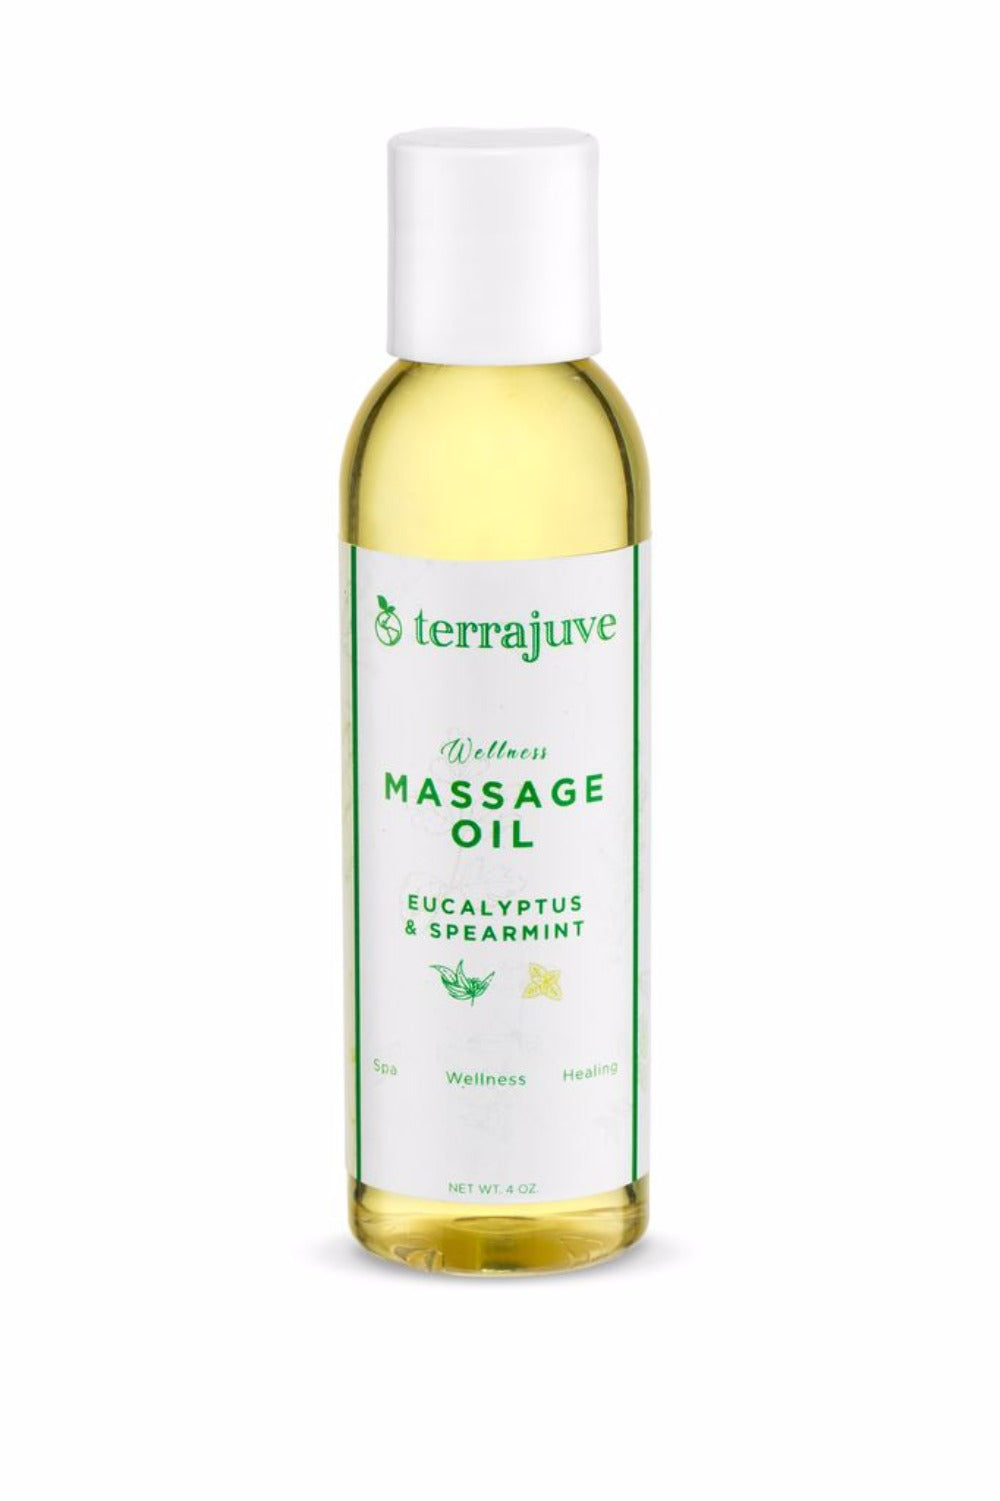 Wellness Bath, Body & Spa Eucalyptus and Spearmint Massage Oil